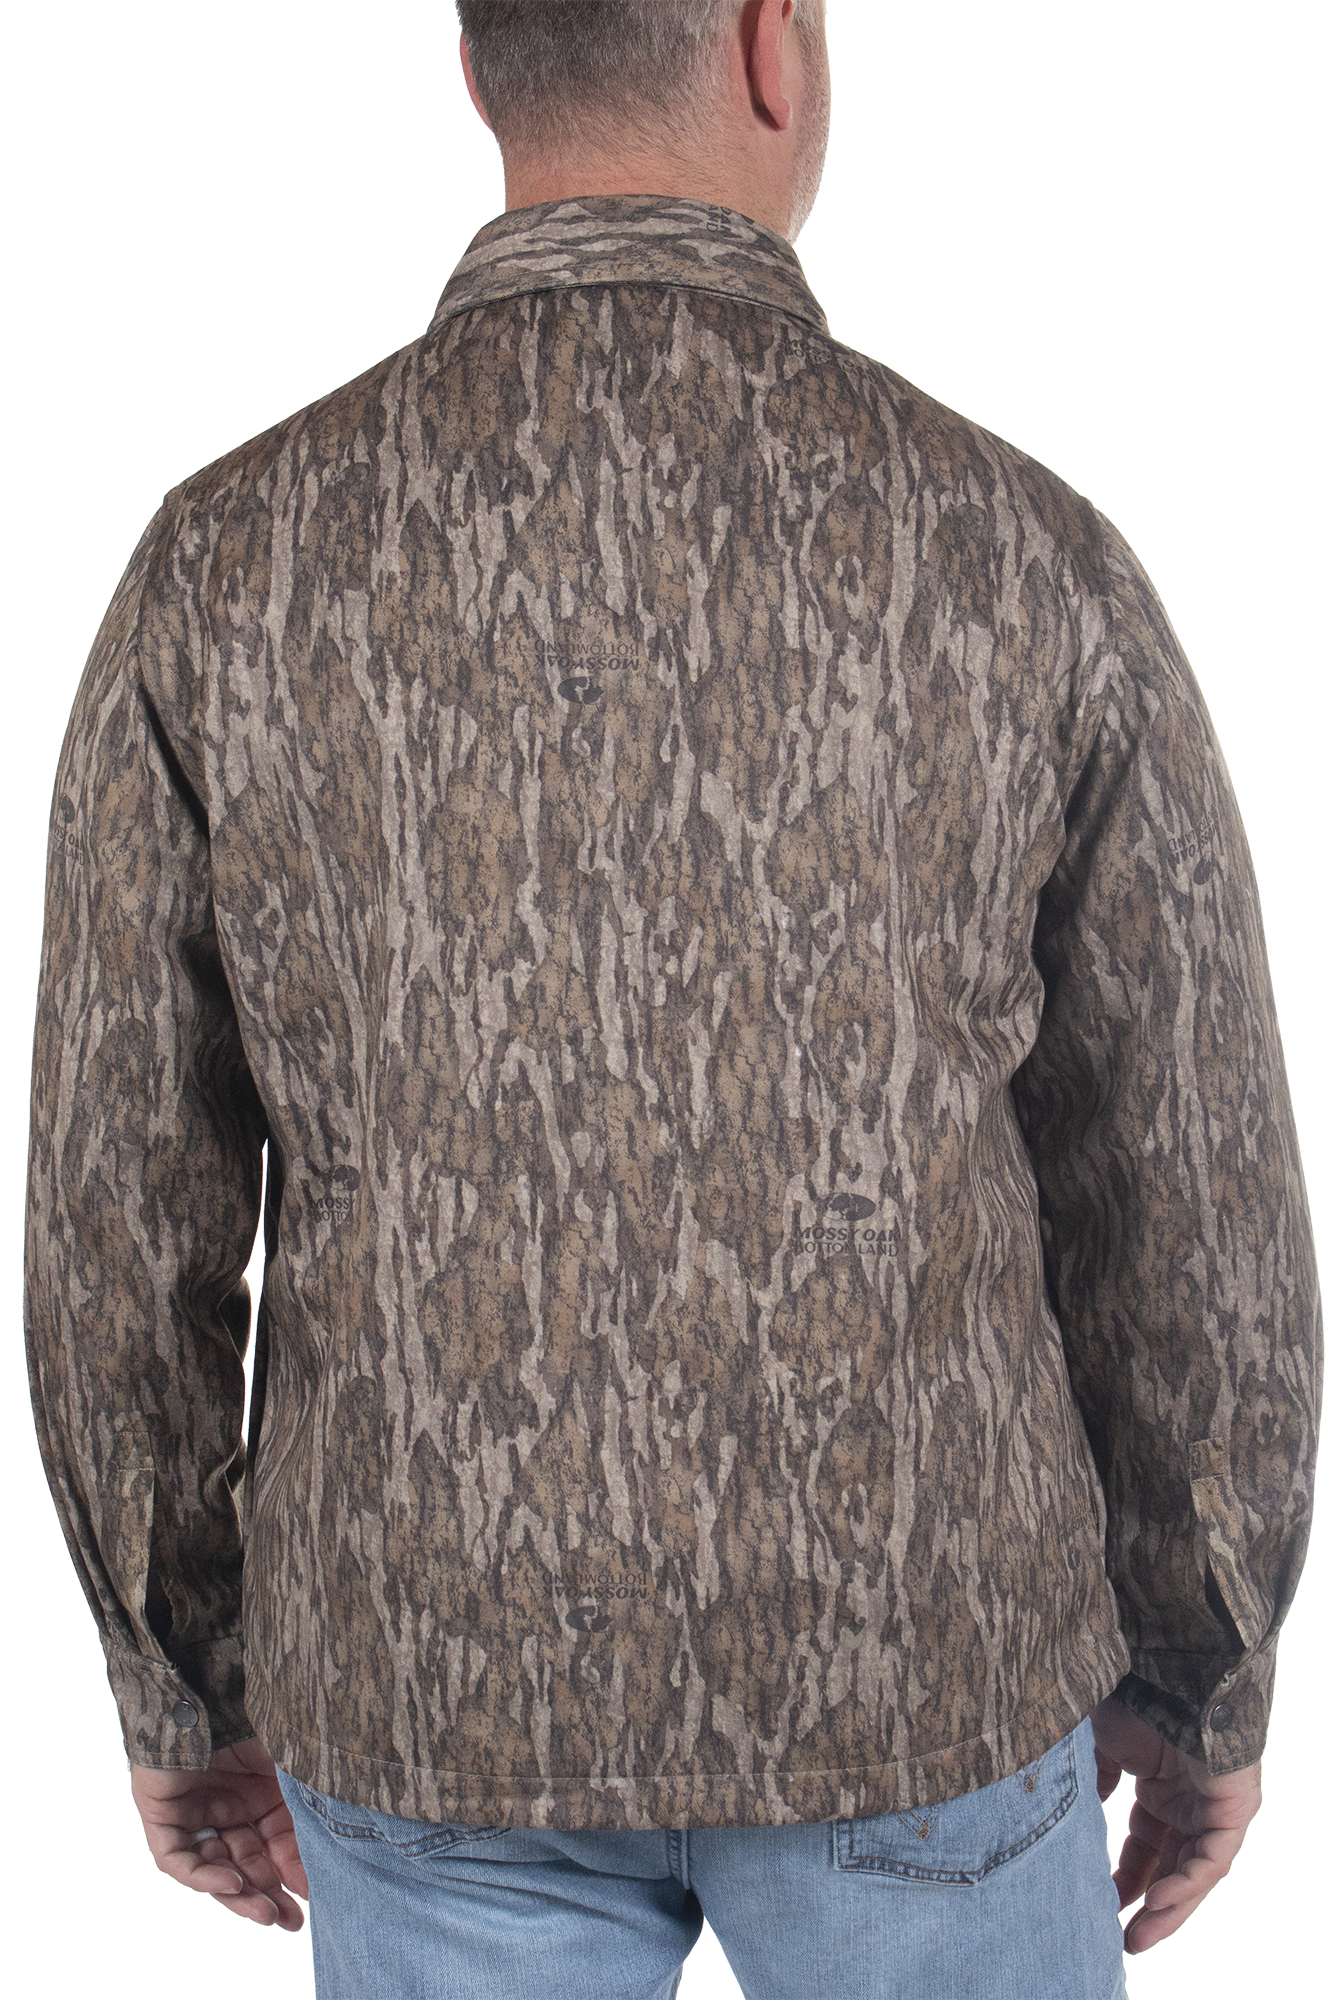 Men's Bowslayer Shirt Jacket - Mossy Oak – Habit Outdoors